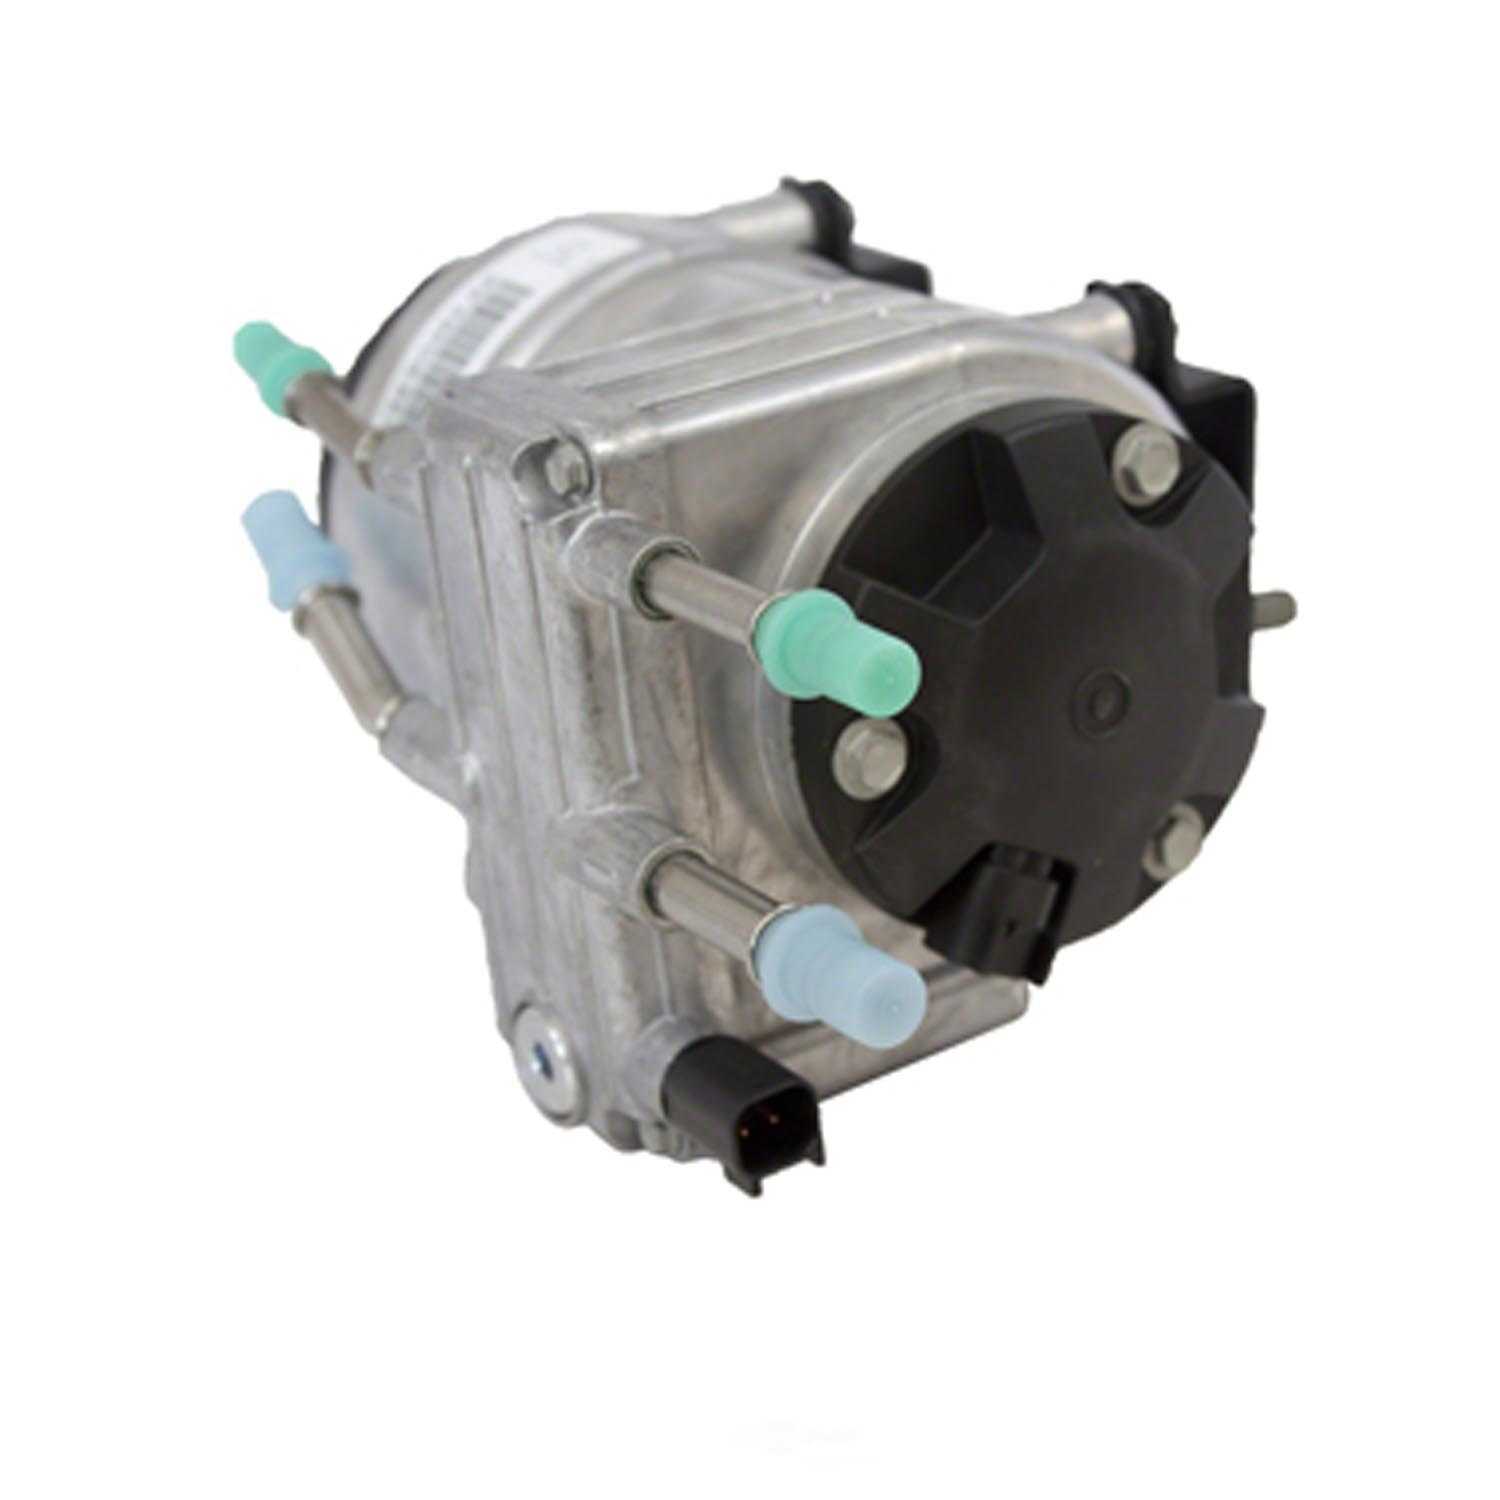 MOTORCRAFT - Fuel Pump And Filter Assembly - MOT PFB-101